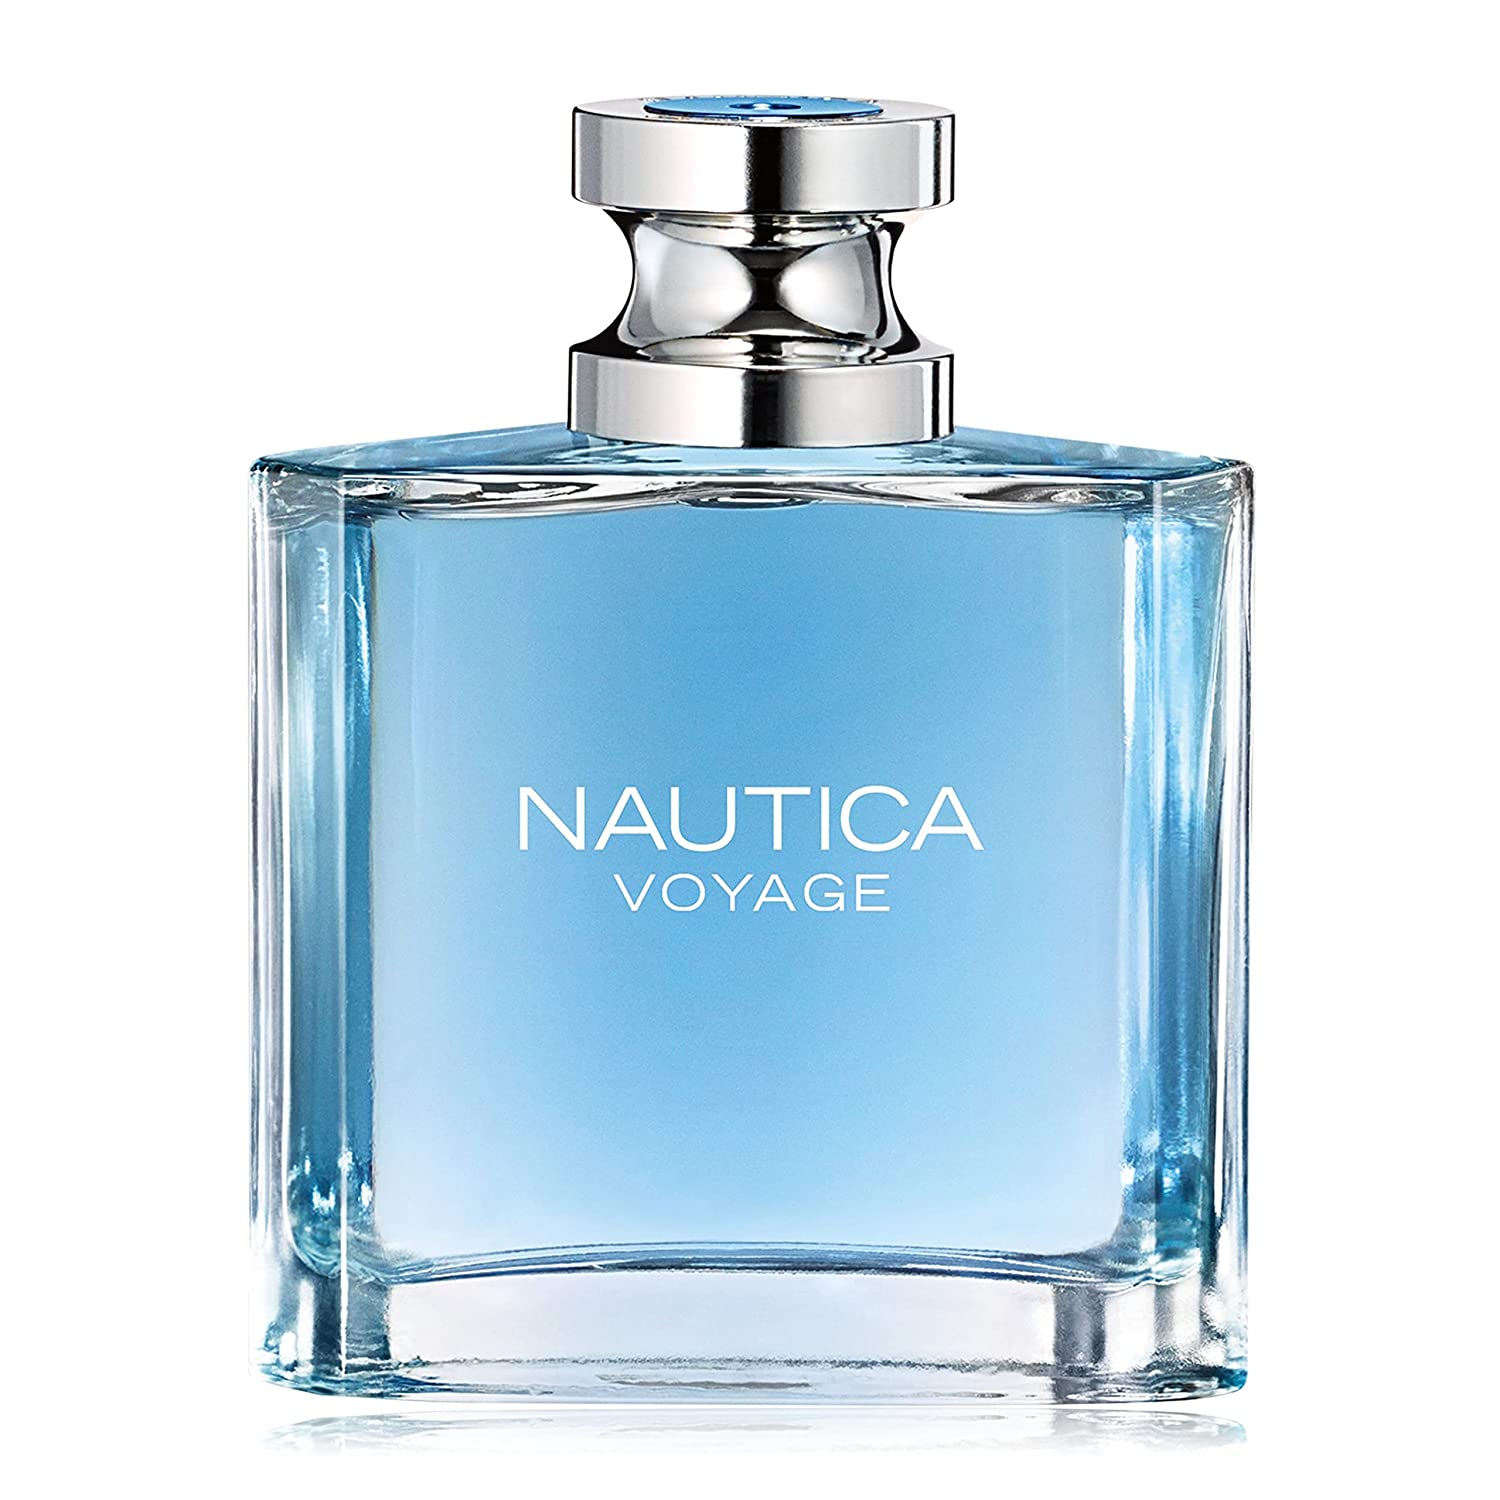 Nautica Voyage Eau De Toilette Spray 100 ml $14.58